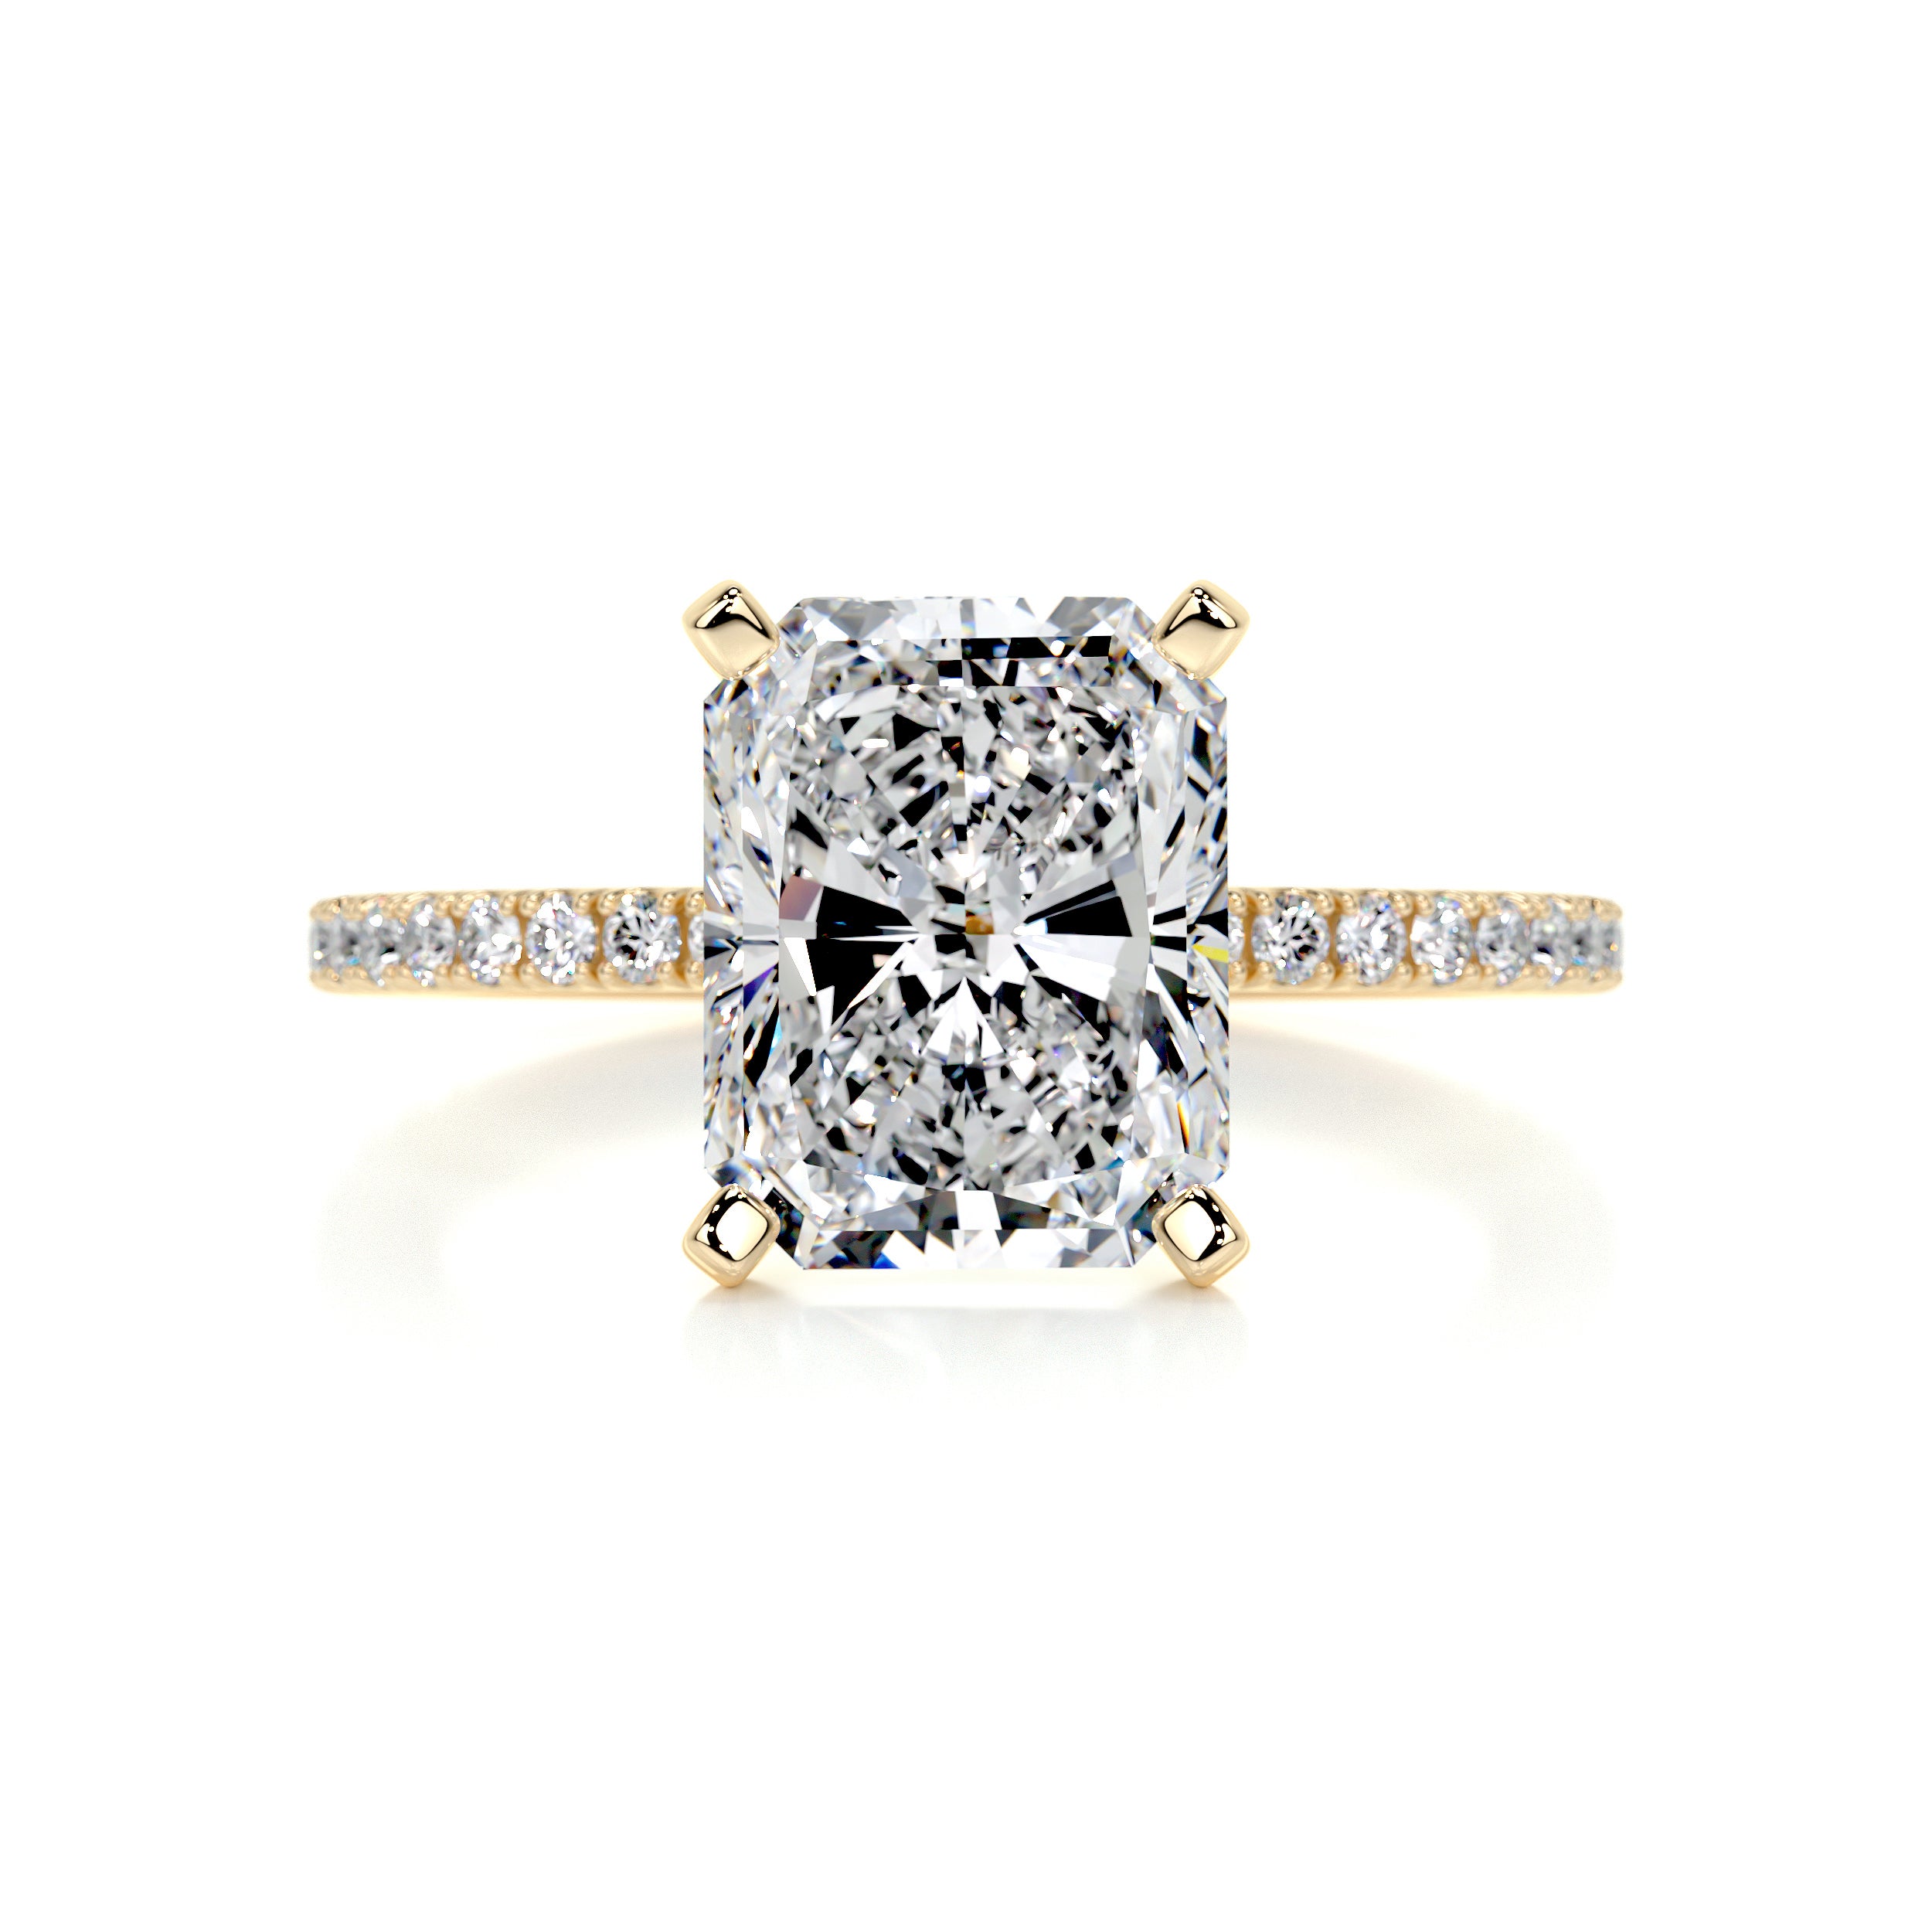 Audrey Diamond Engagement Ring   (3.5 Carat) -18K Yellow Gold